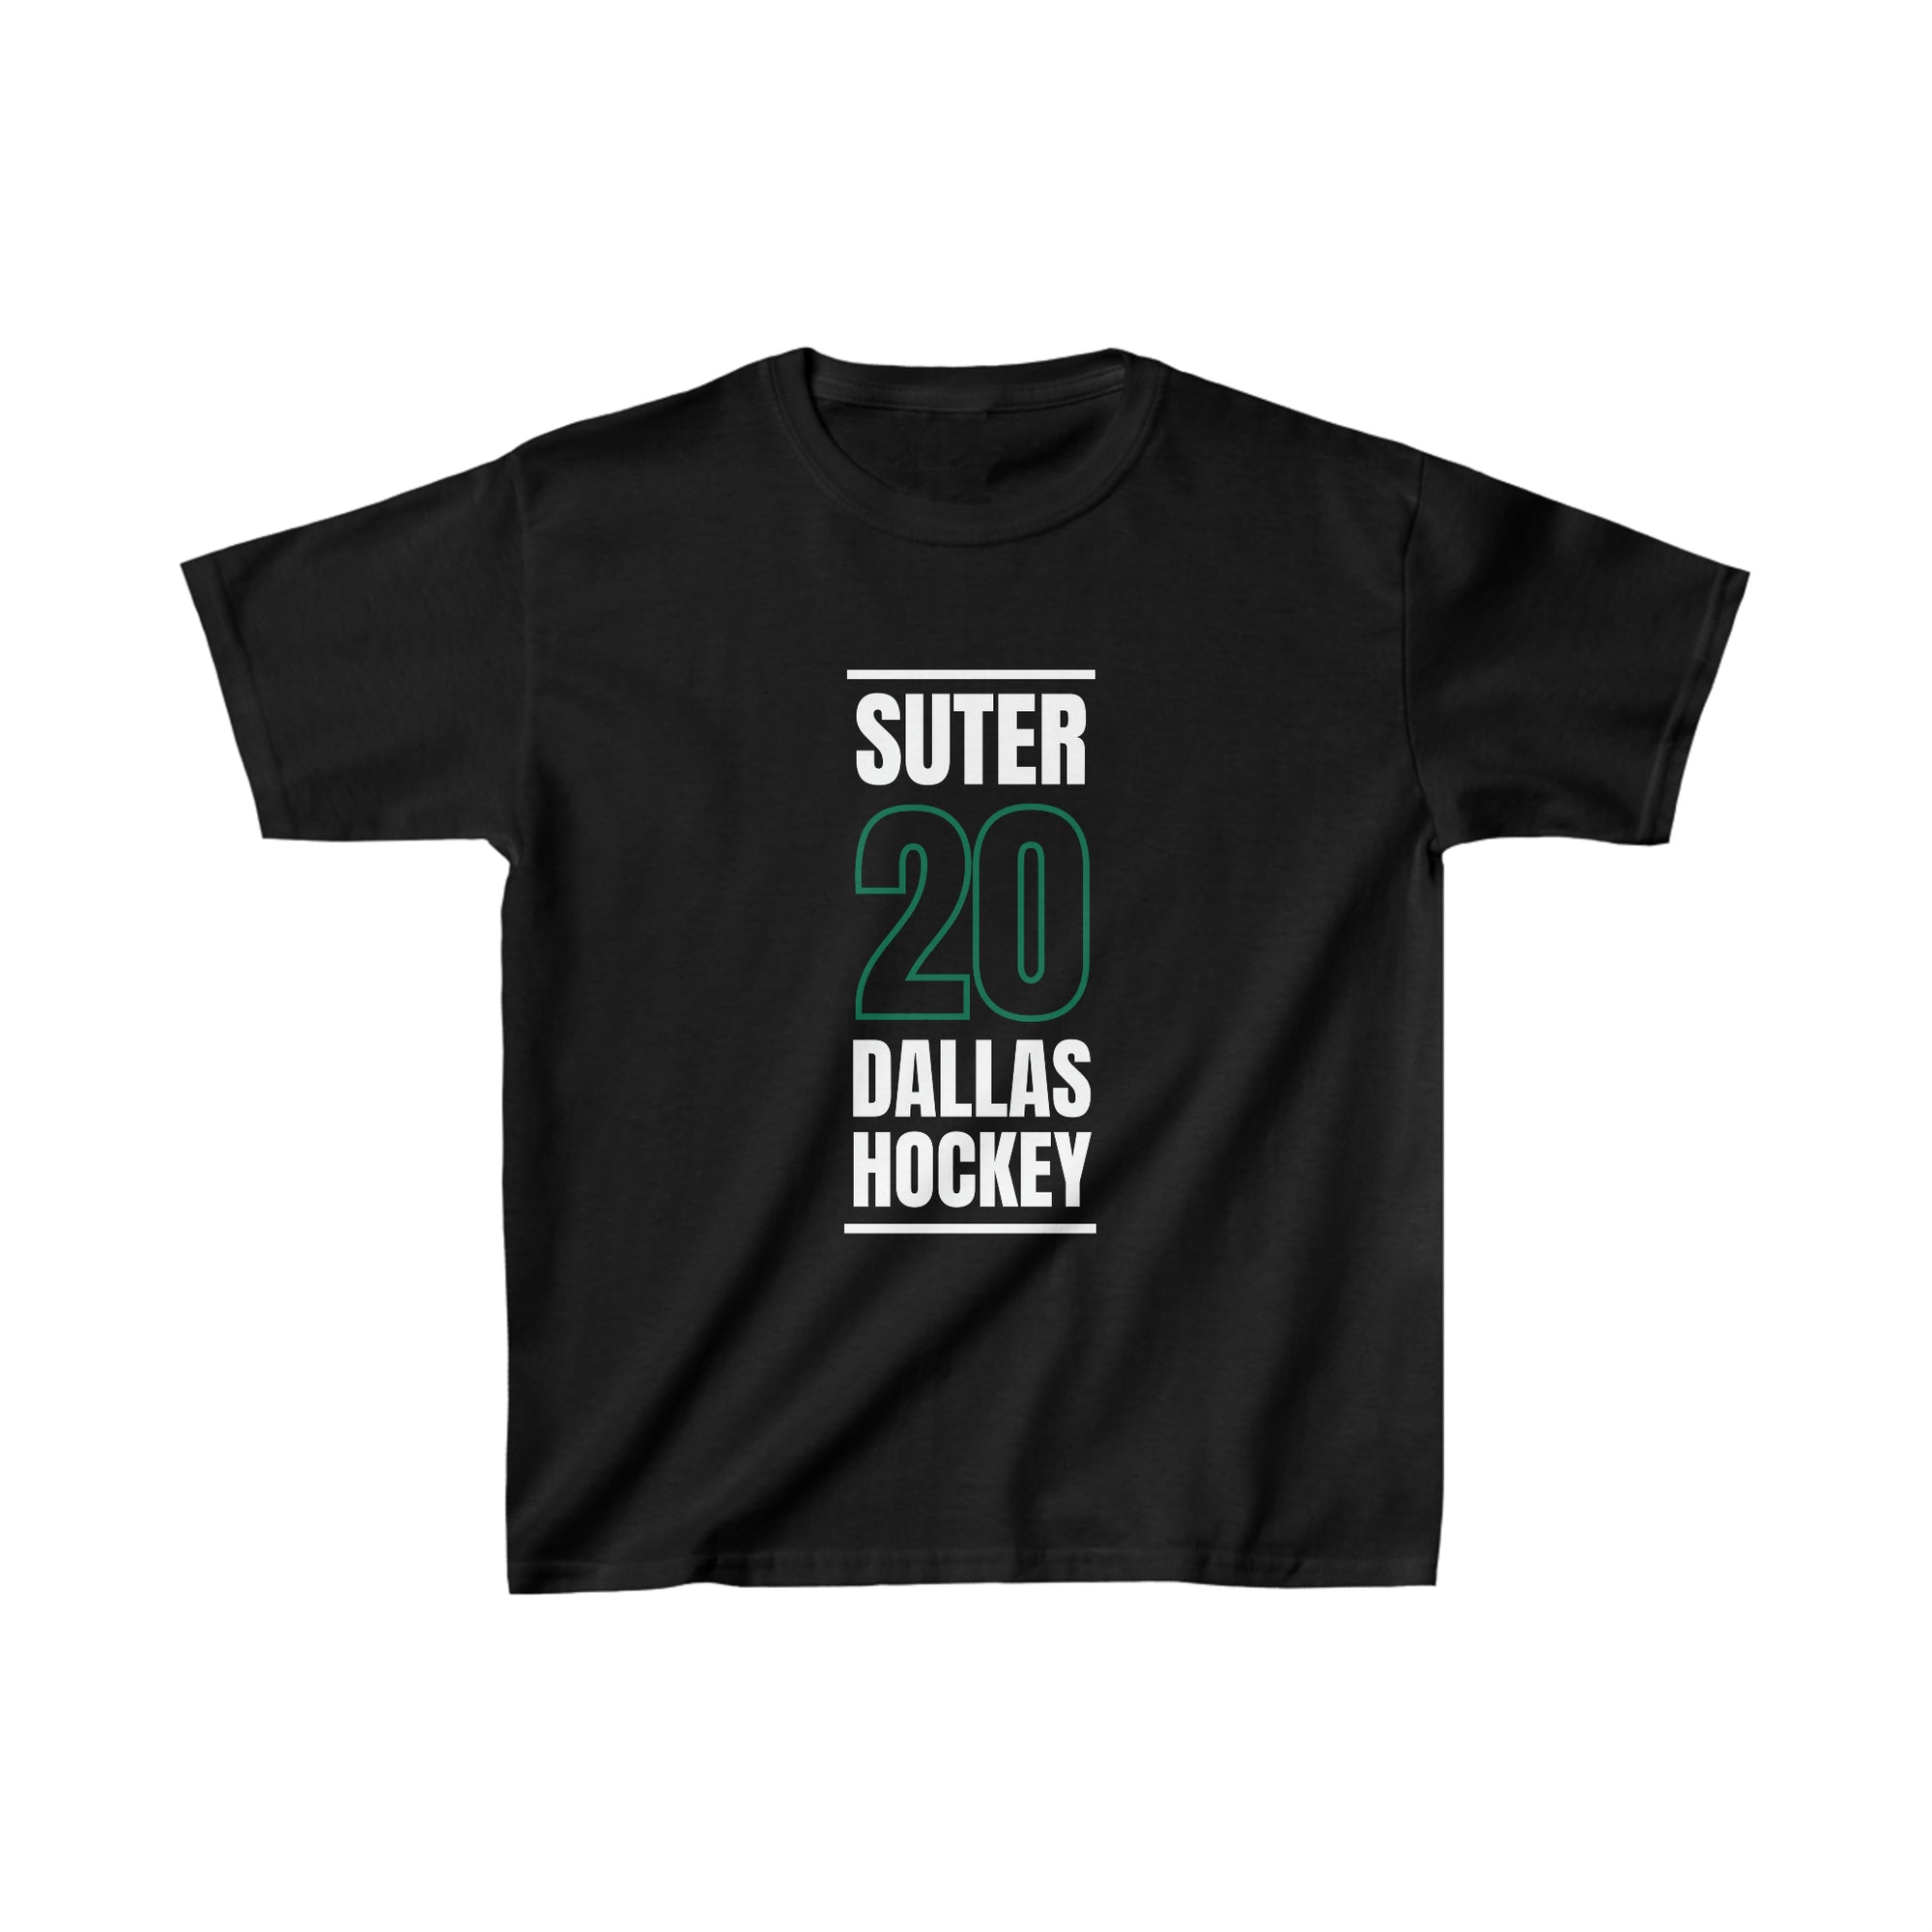 Suter 20 Dallas Hockey Black Vertical Design Kids Tee